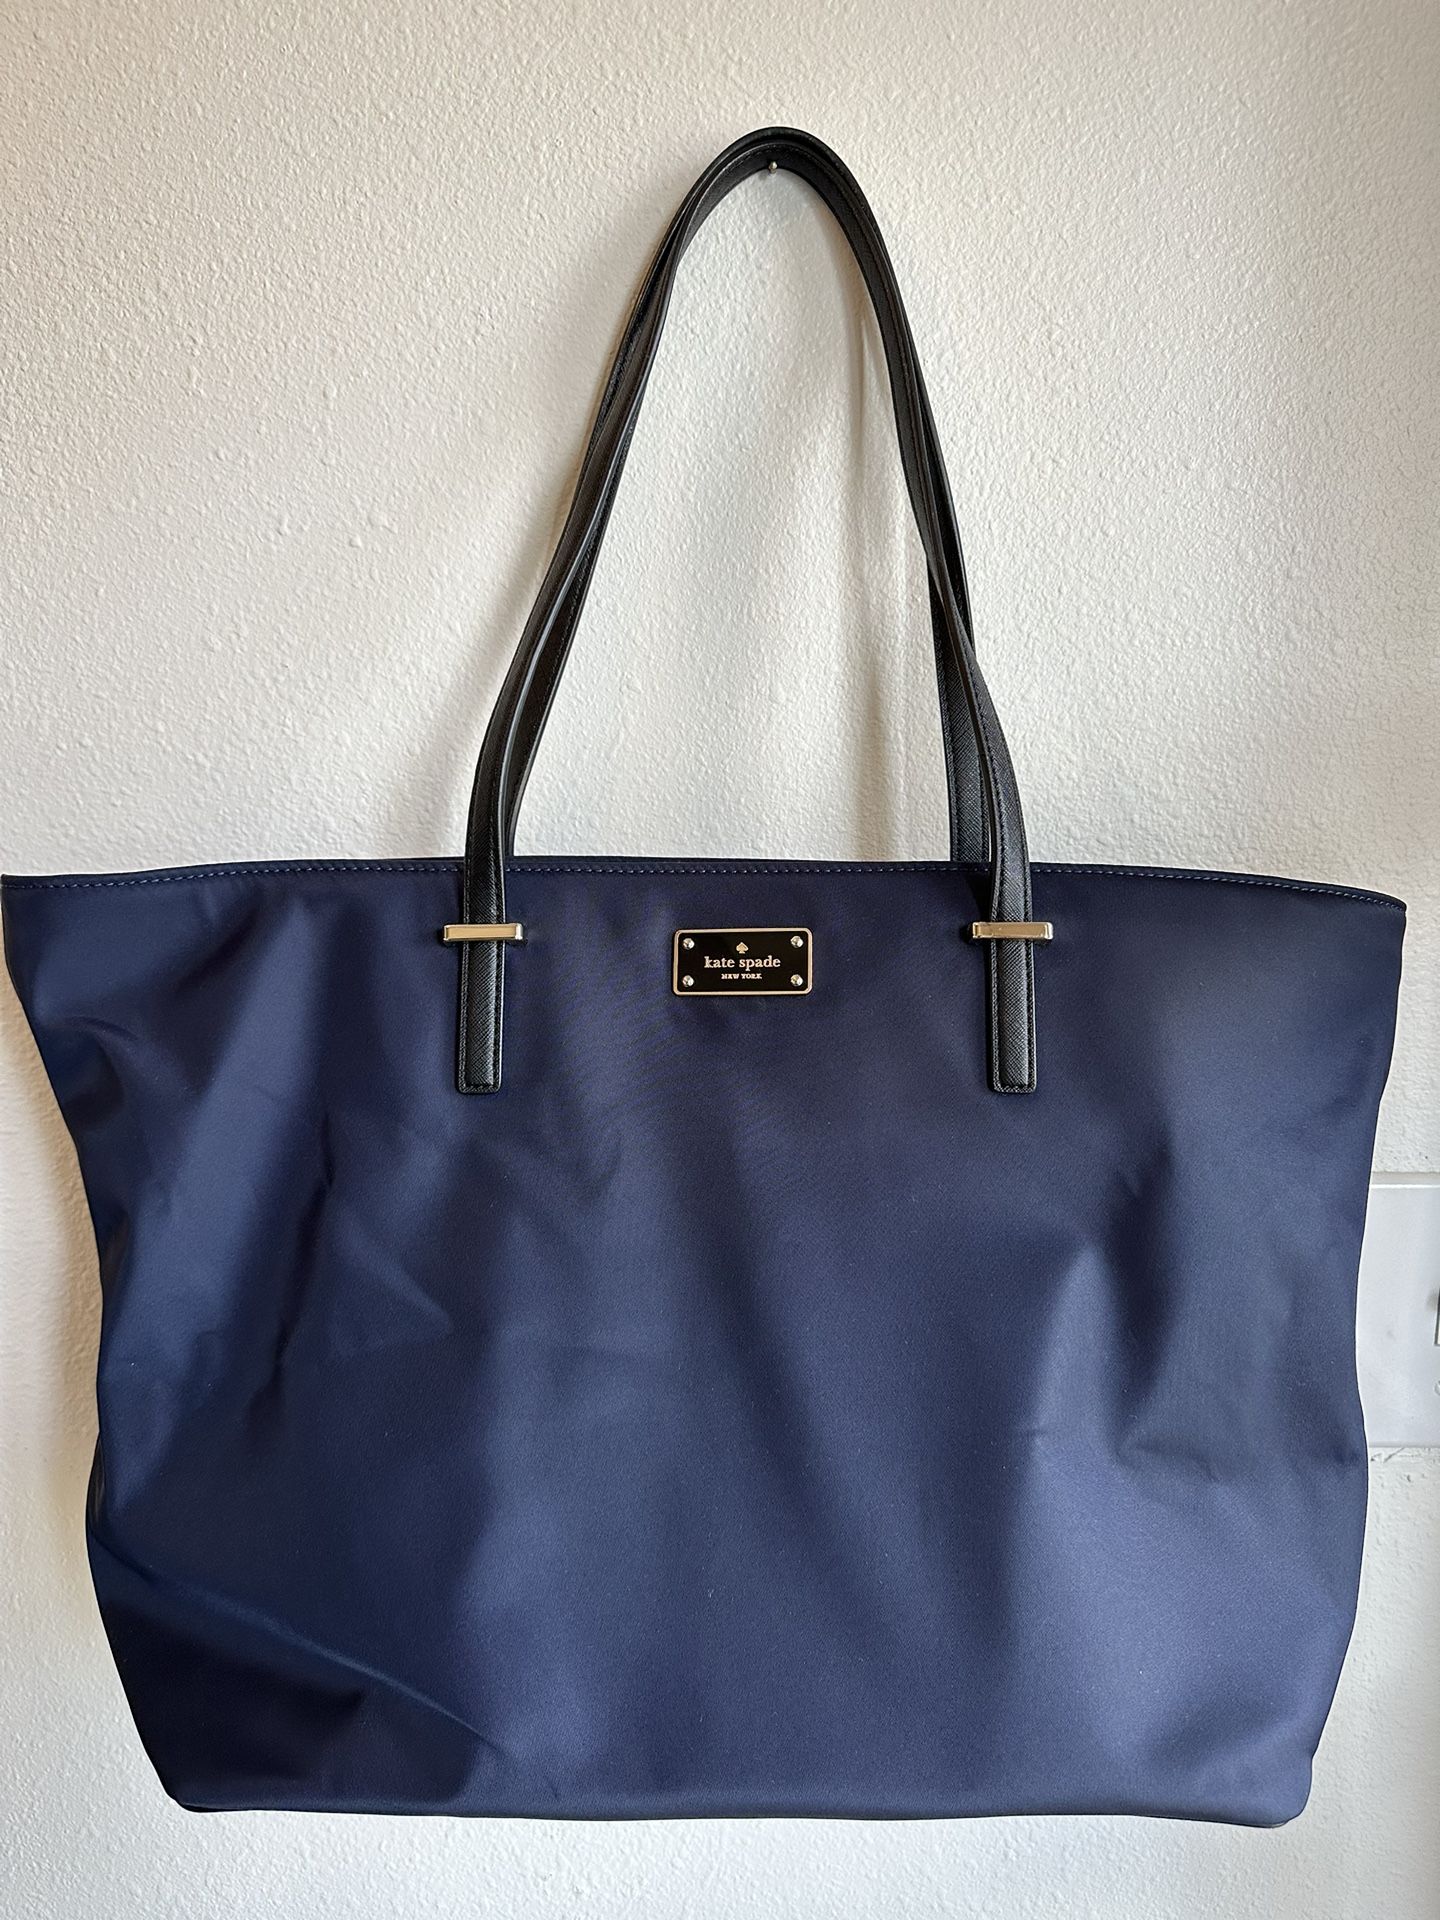 Kate Spade Blue Nylon Tote Bag